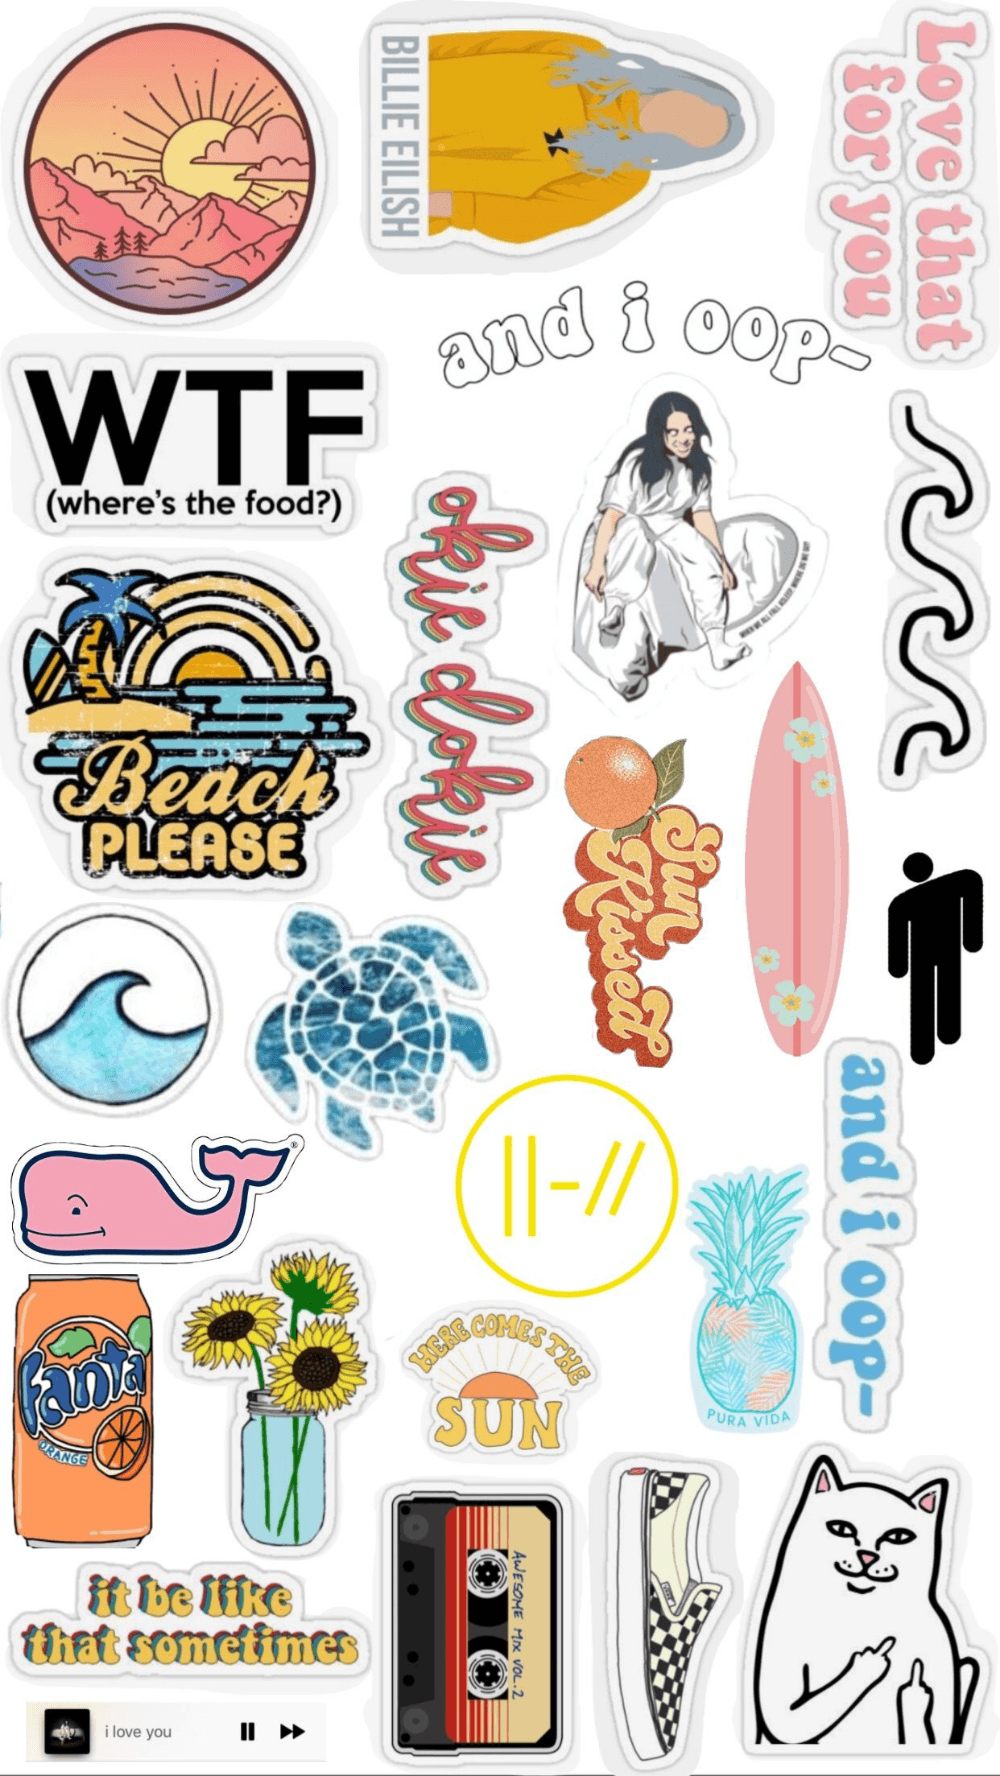 Aa VSCO girl. Stickers